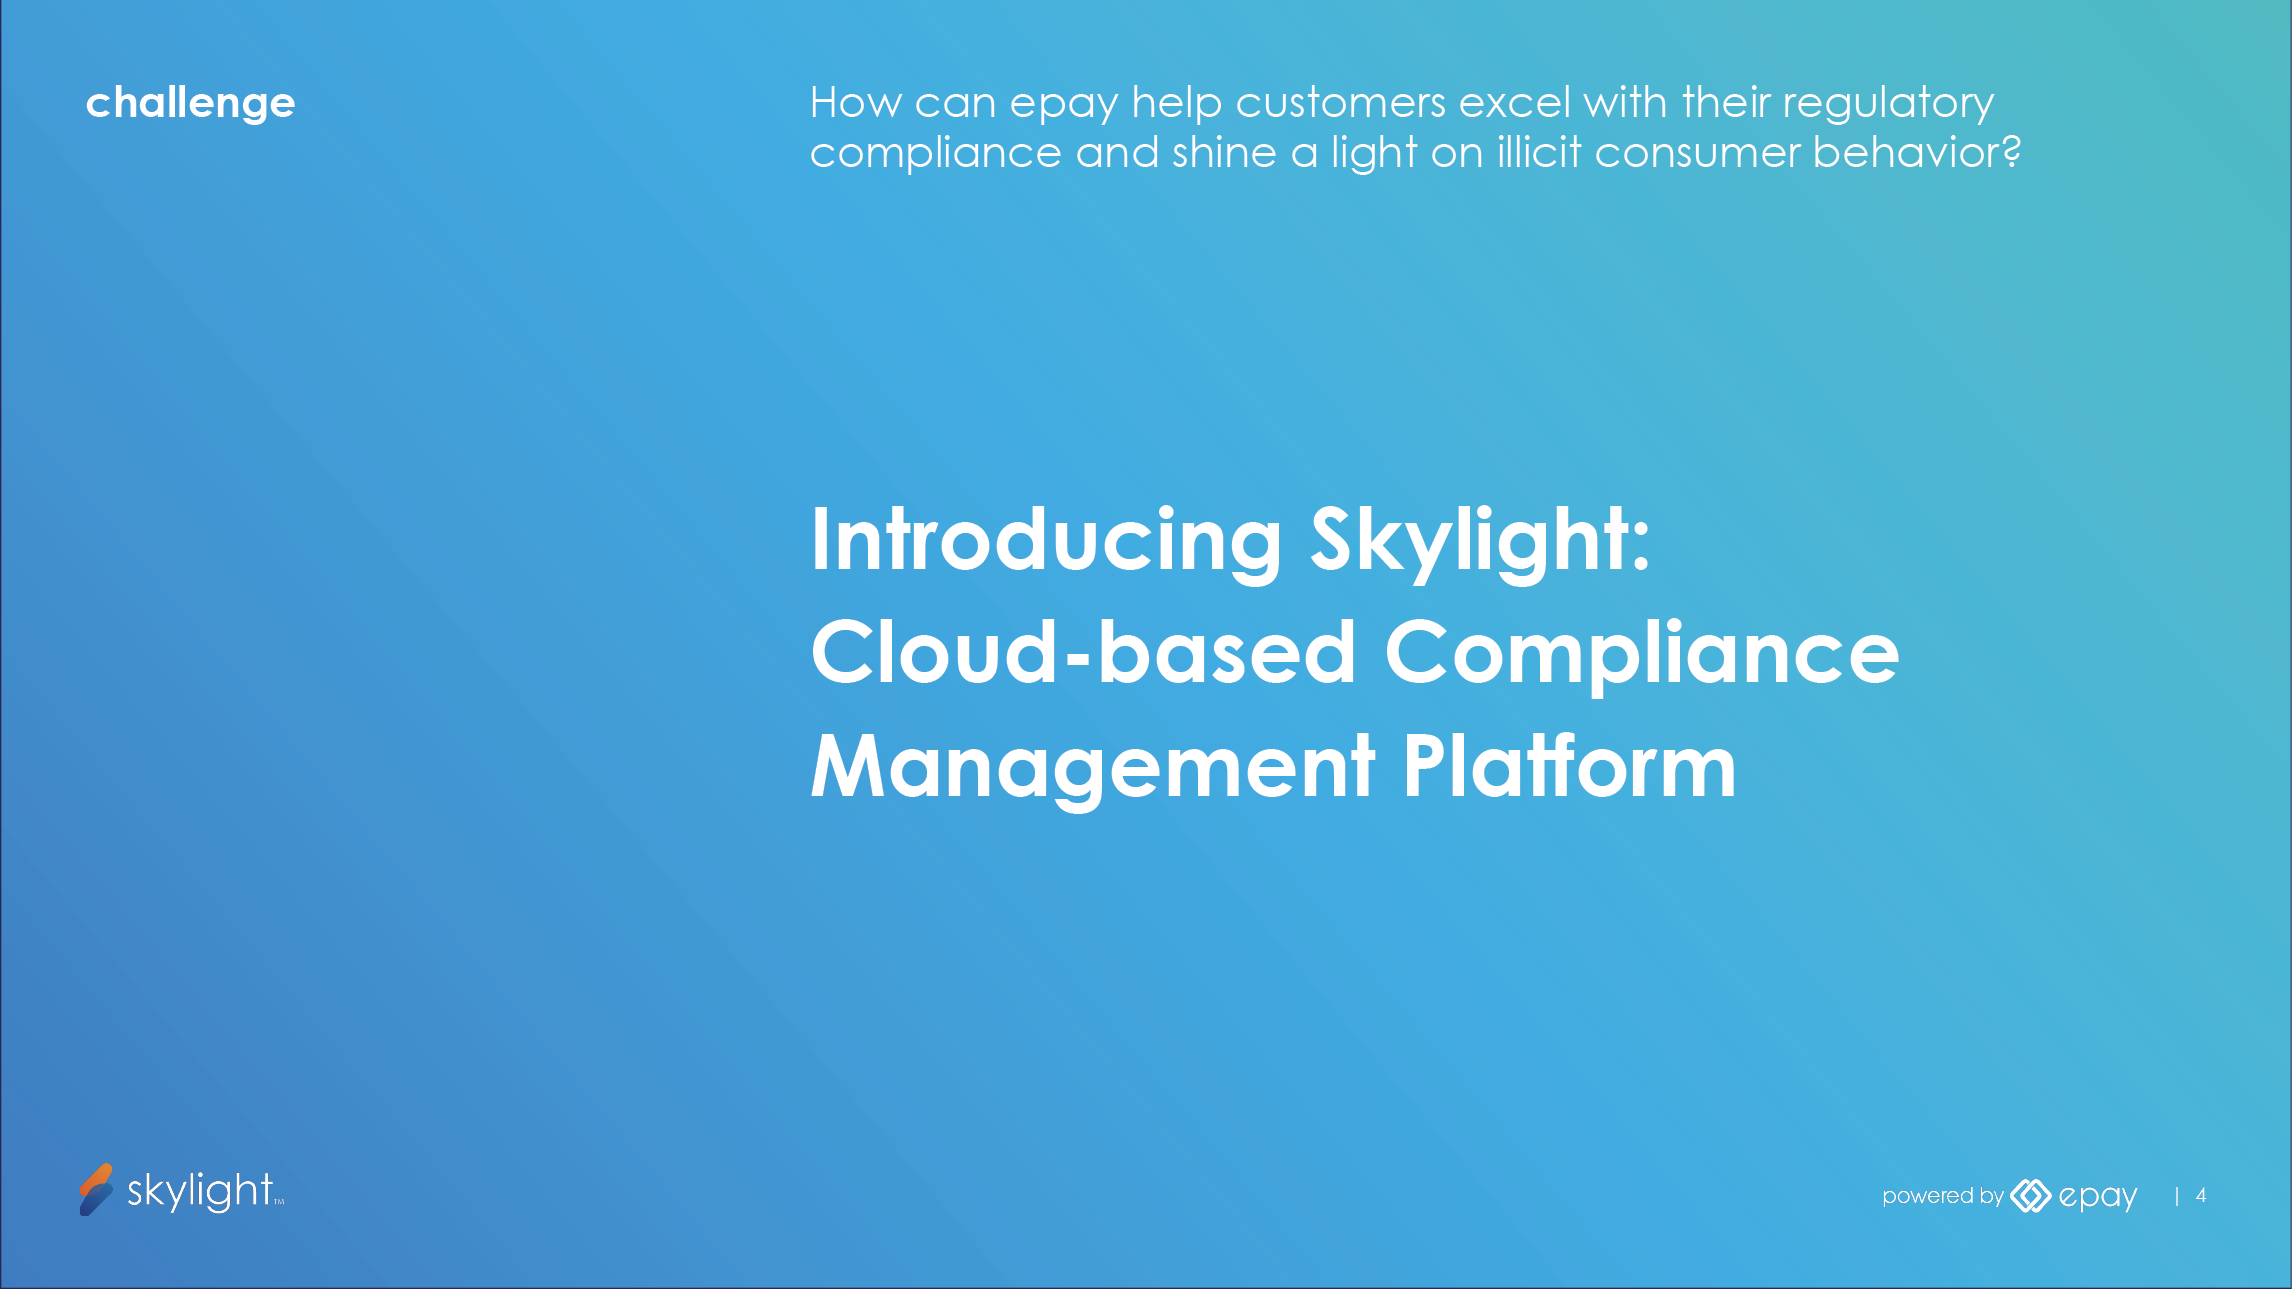 Skylight presentation deck — "challenge"